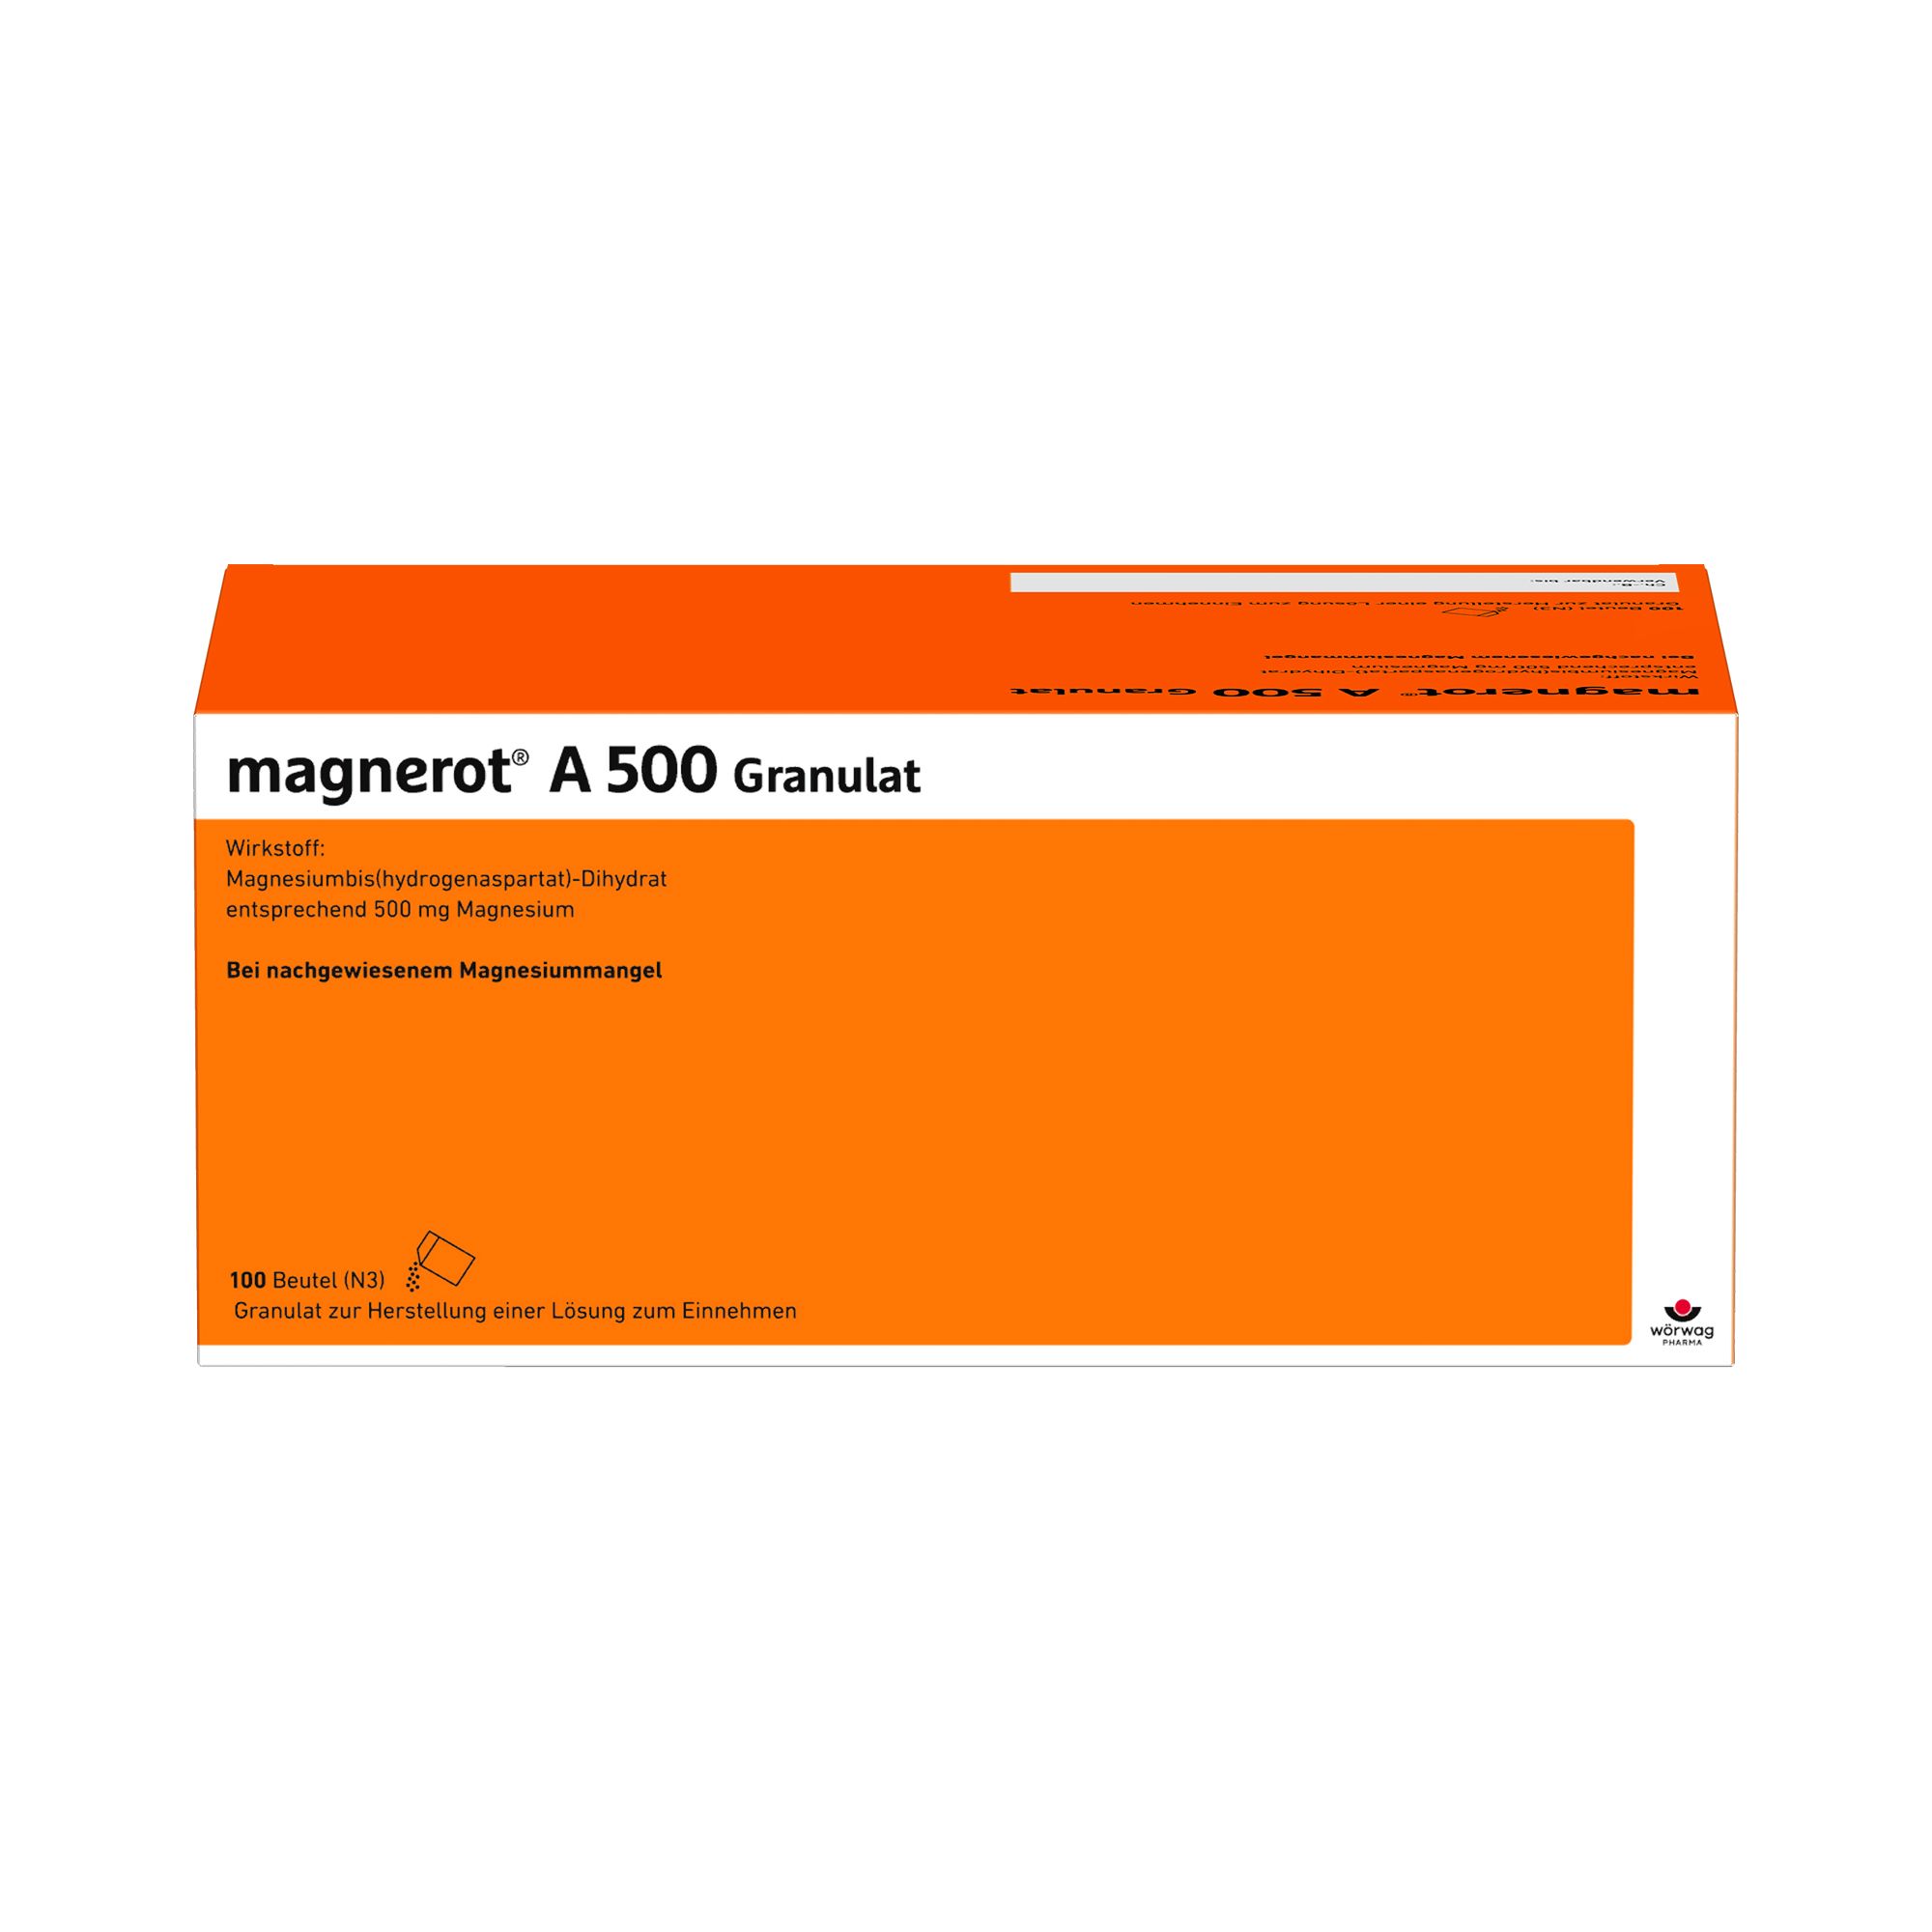 magnerot® A 500 Granulat